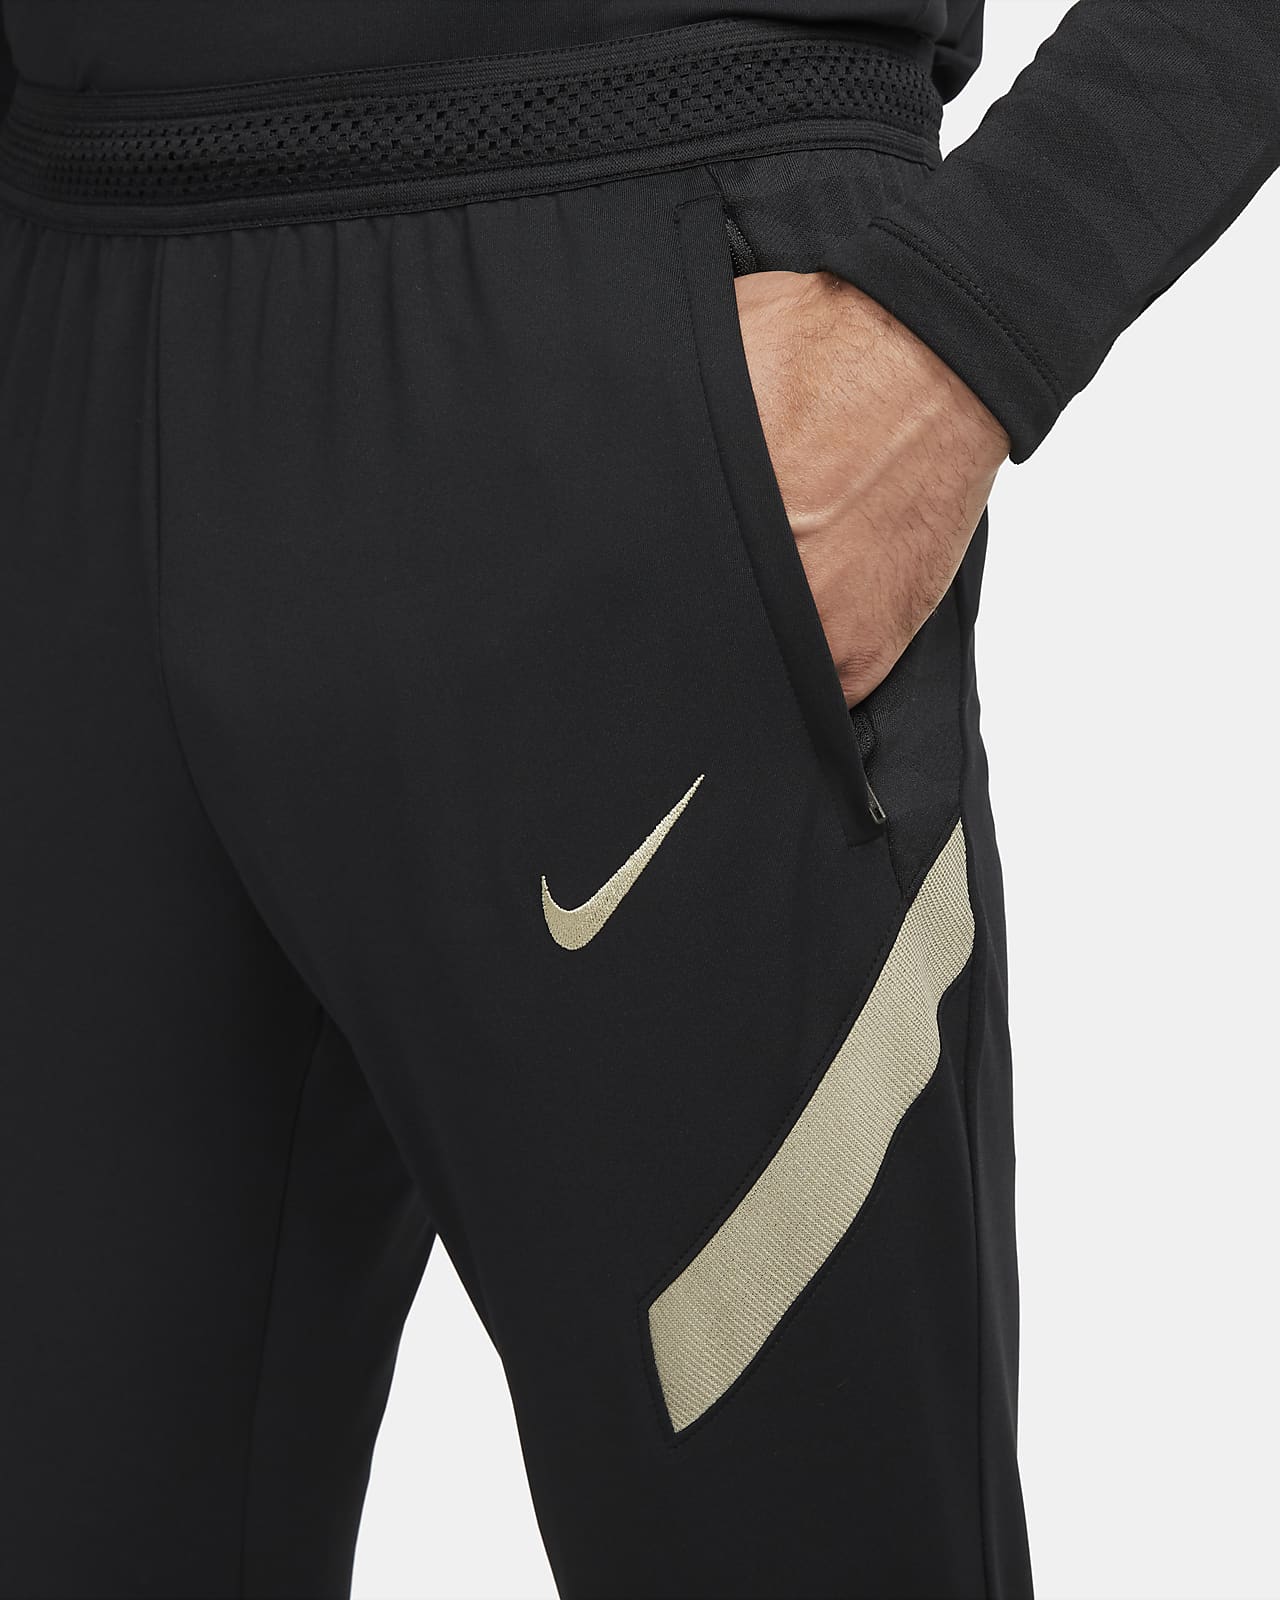 kosten Moreel onderwijs Bekwaamheid Liverpool FC Strike Men's Knit Soccer Pants. Nike.com